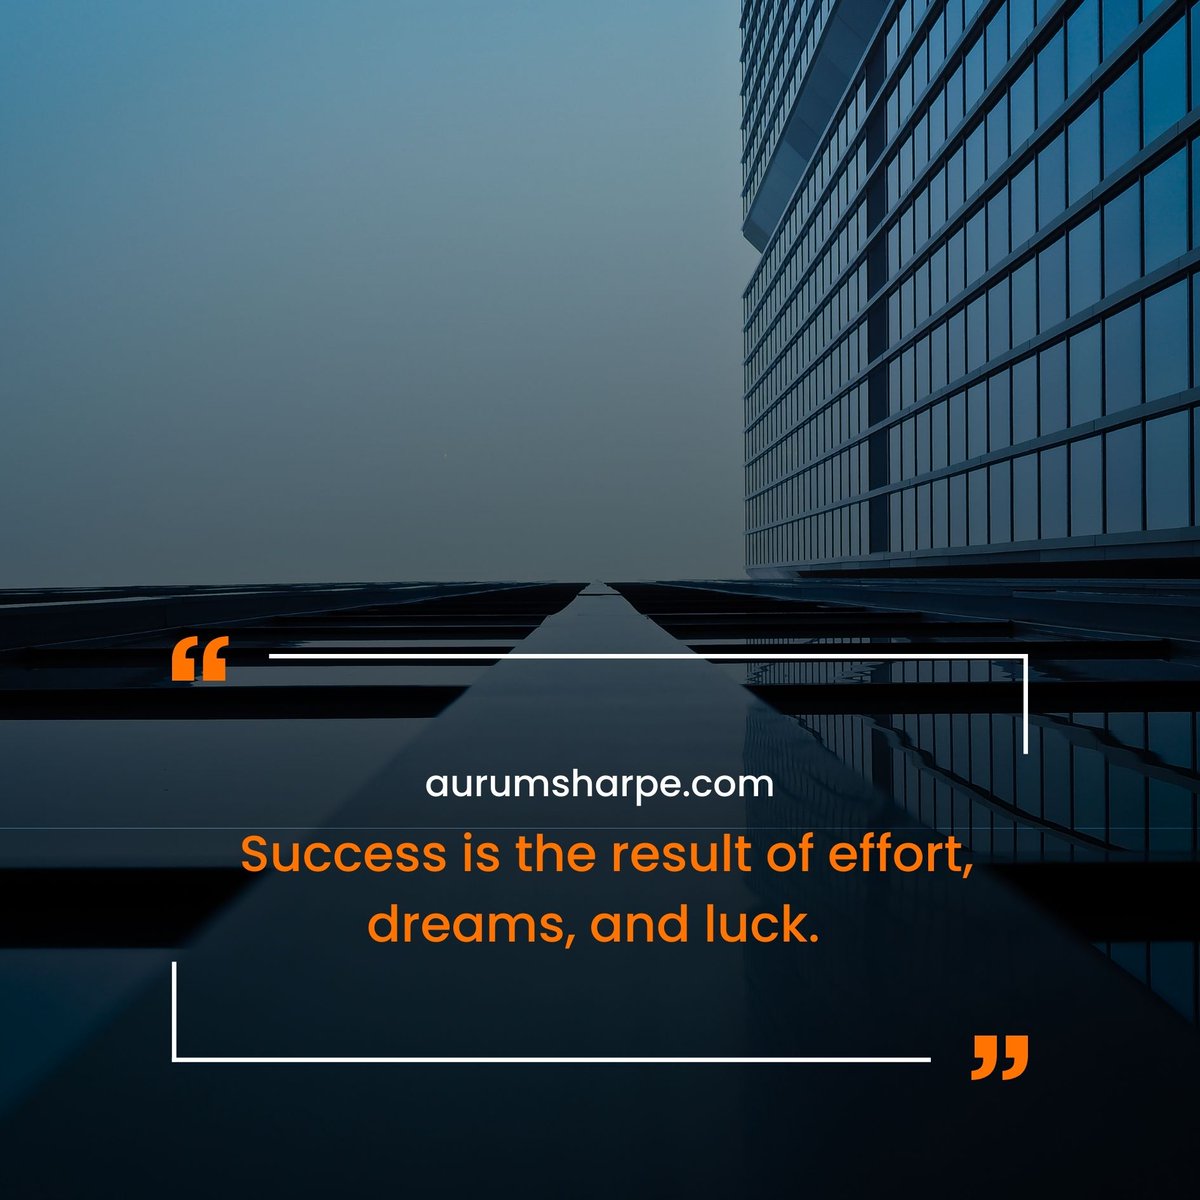 Success is the result of effort, dreams, and luck. 
#mortgagebrokers #Aurum #brooklyn #NYC #broker #mortgagelender #mortgagebrokertips